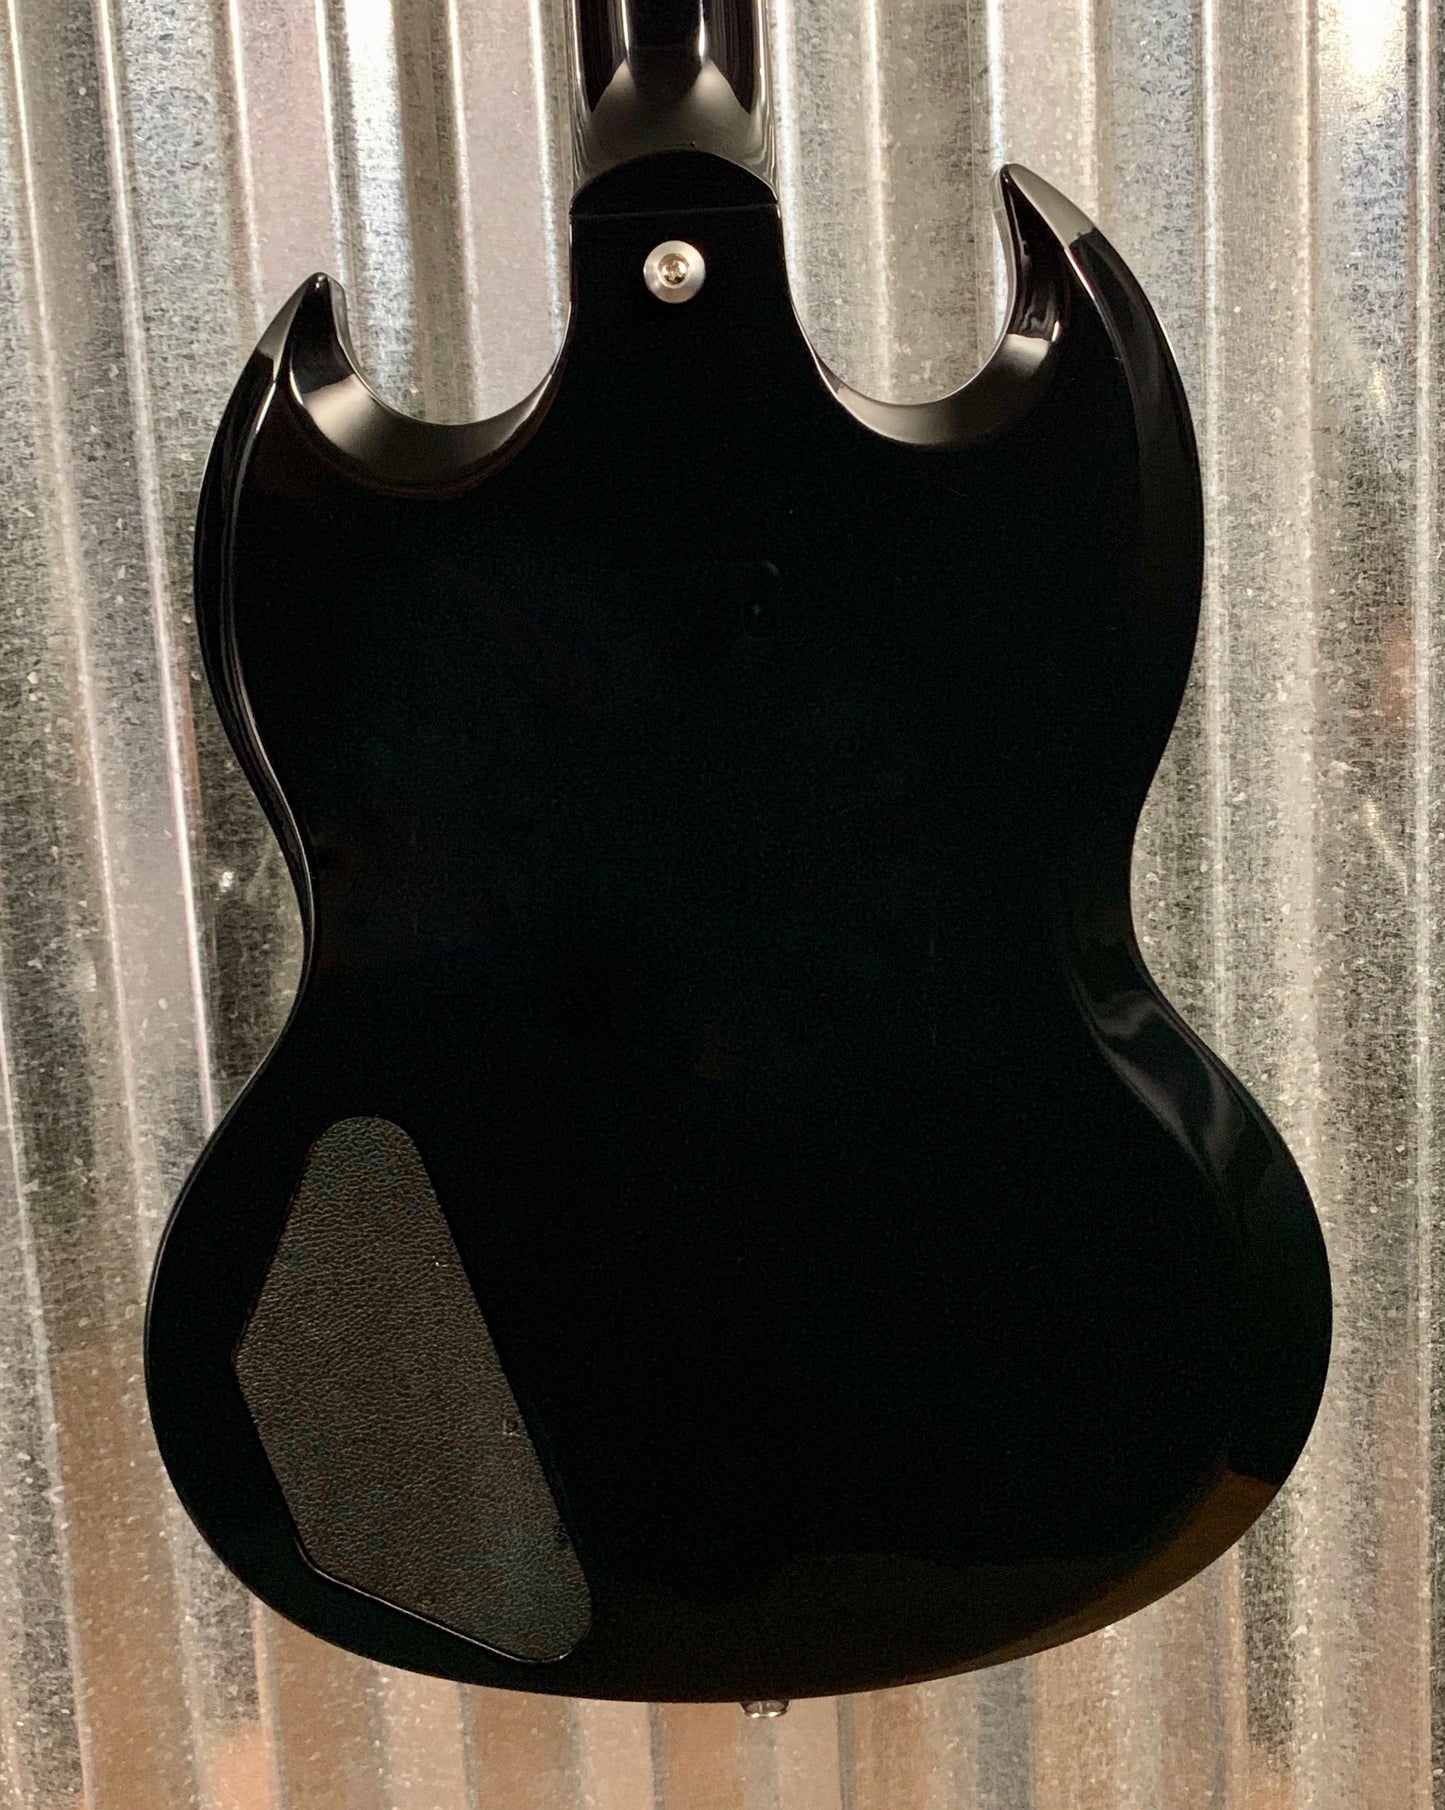 Gibson USA 2018 SG Standard Black Guitar & Case #0229 Used